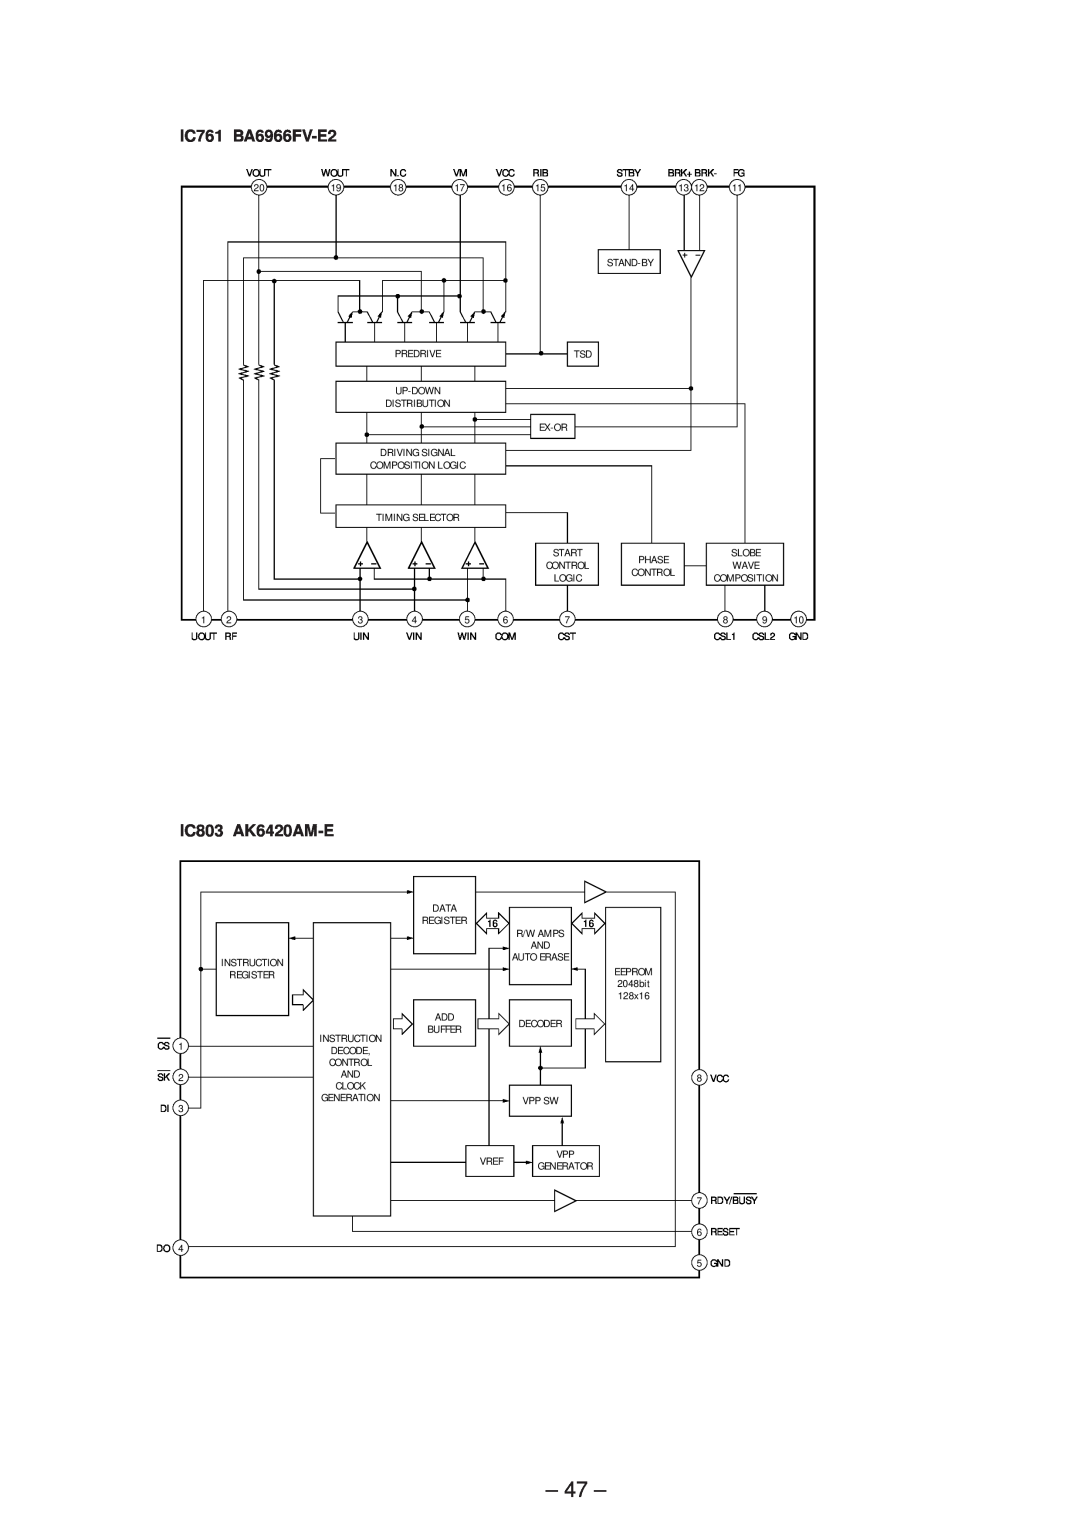 Sony MZ-R37 specifications 47, IC761 BA6966FV-E2, IC803 AK6420AM-E 